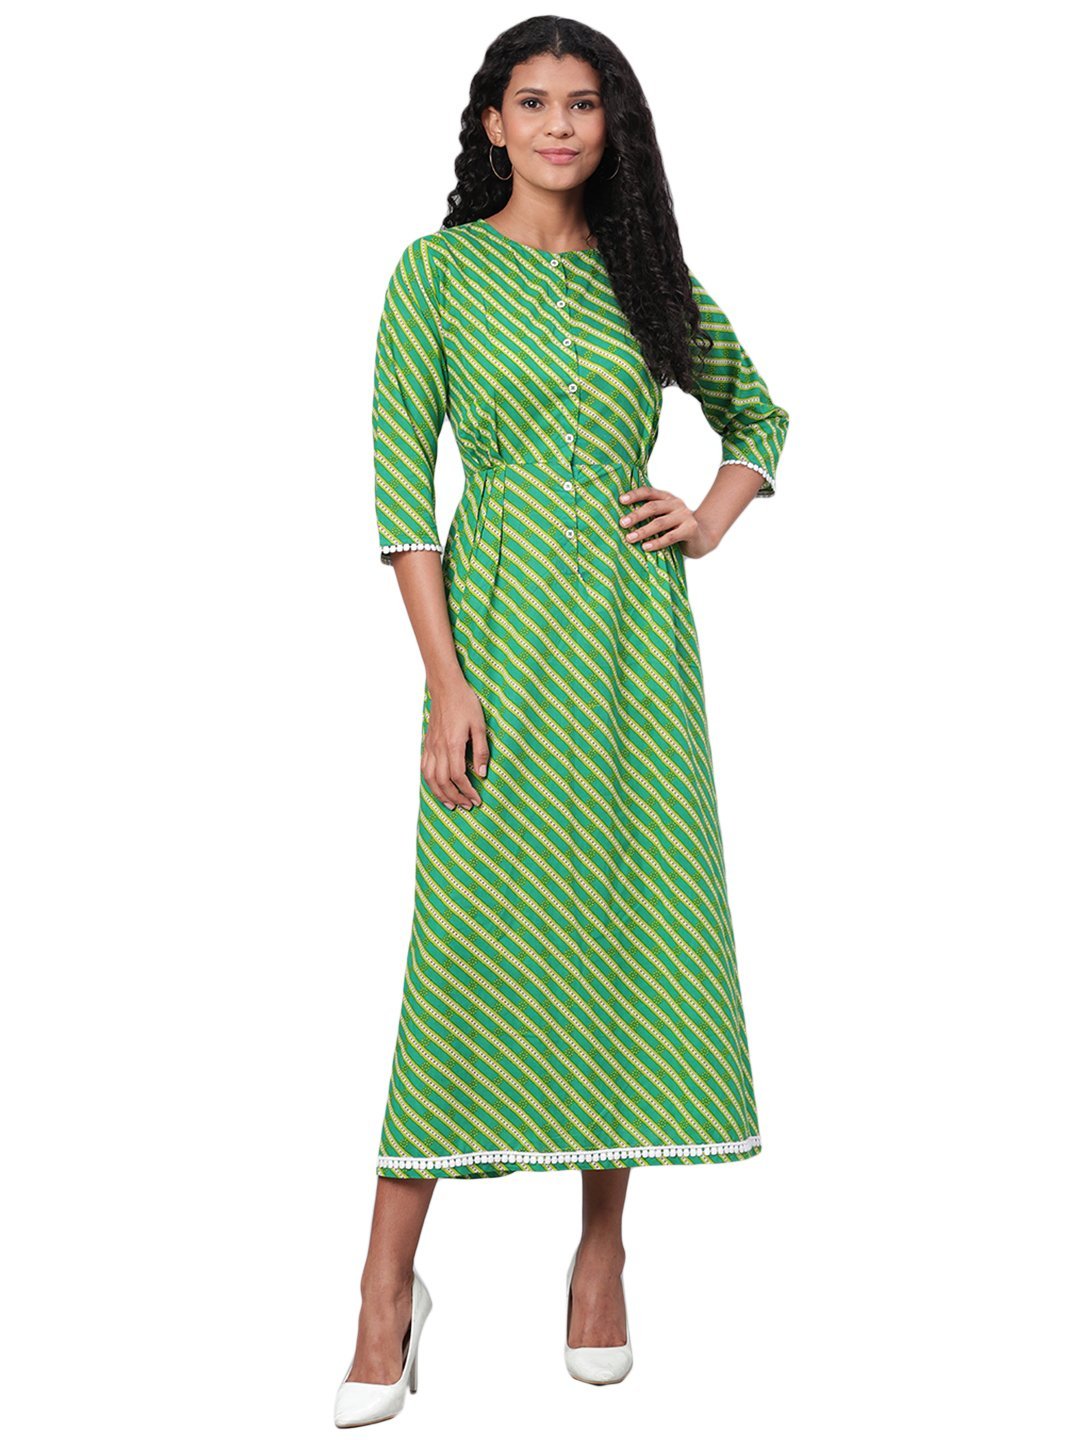 Women's Green Printed 3/4 Sleeve Cotton Round Neck Casual Dress - Myshka